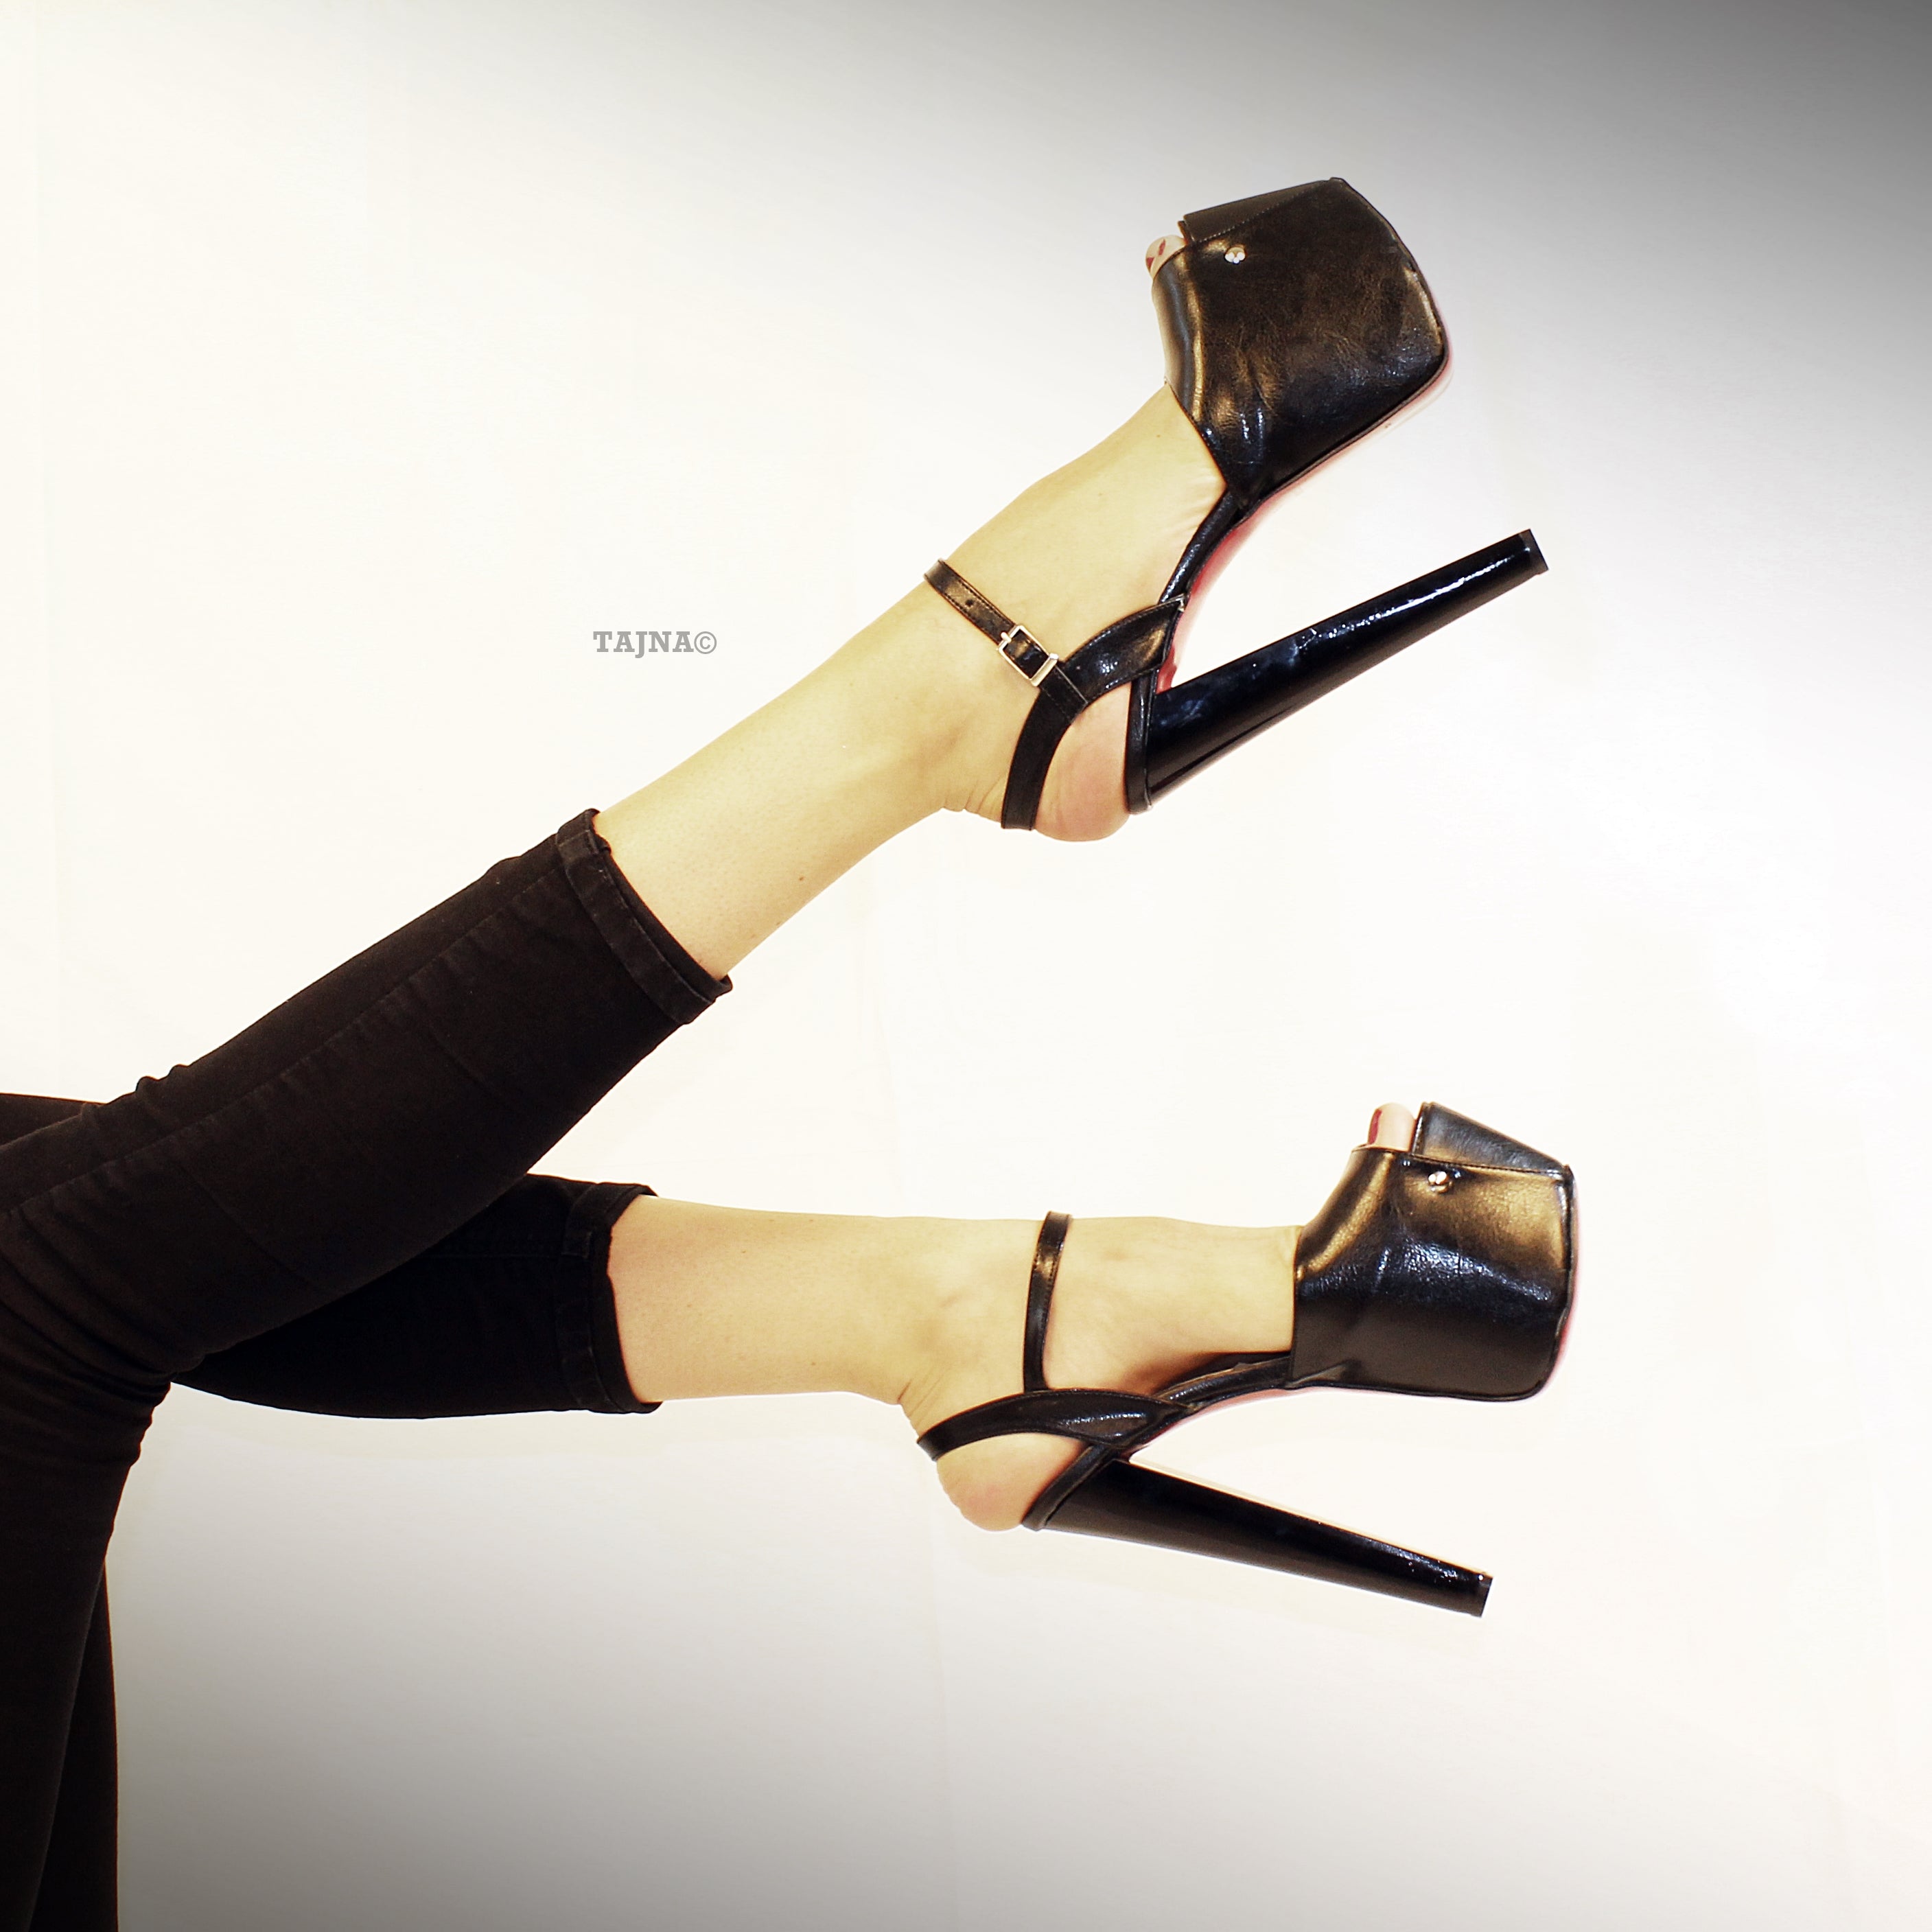 Black Peep Toe Open Back Platform Heels 19 cm - Tajna Club